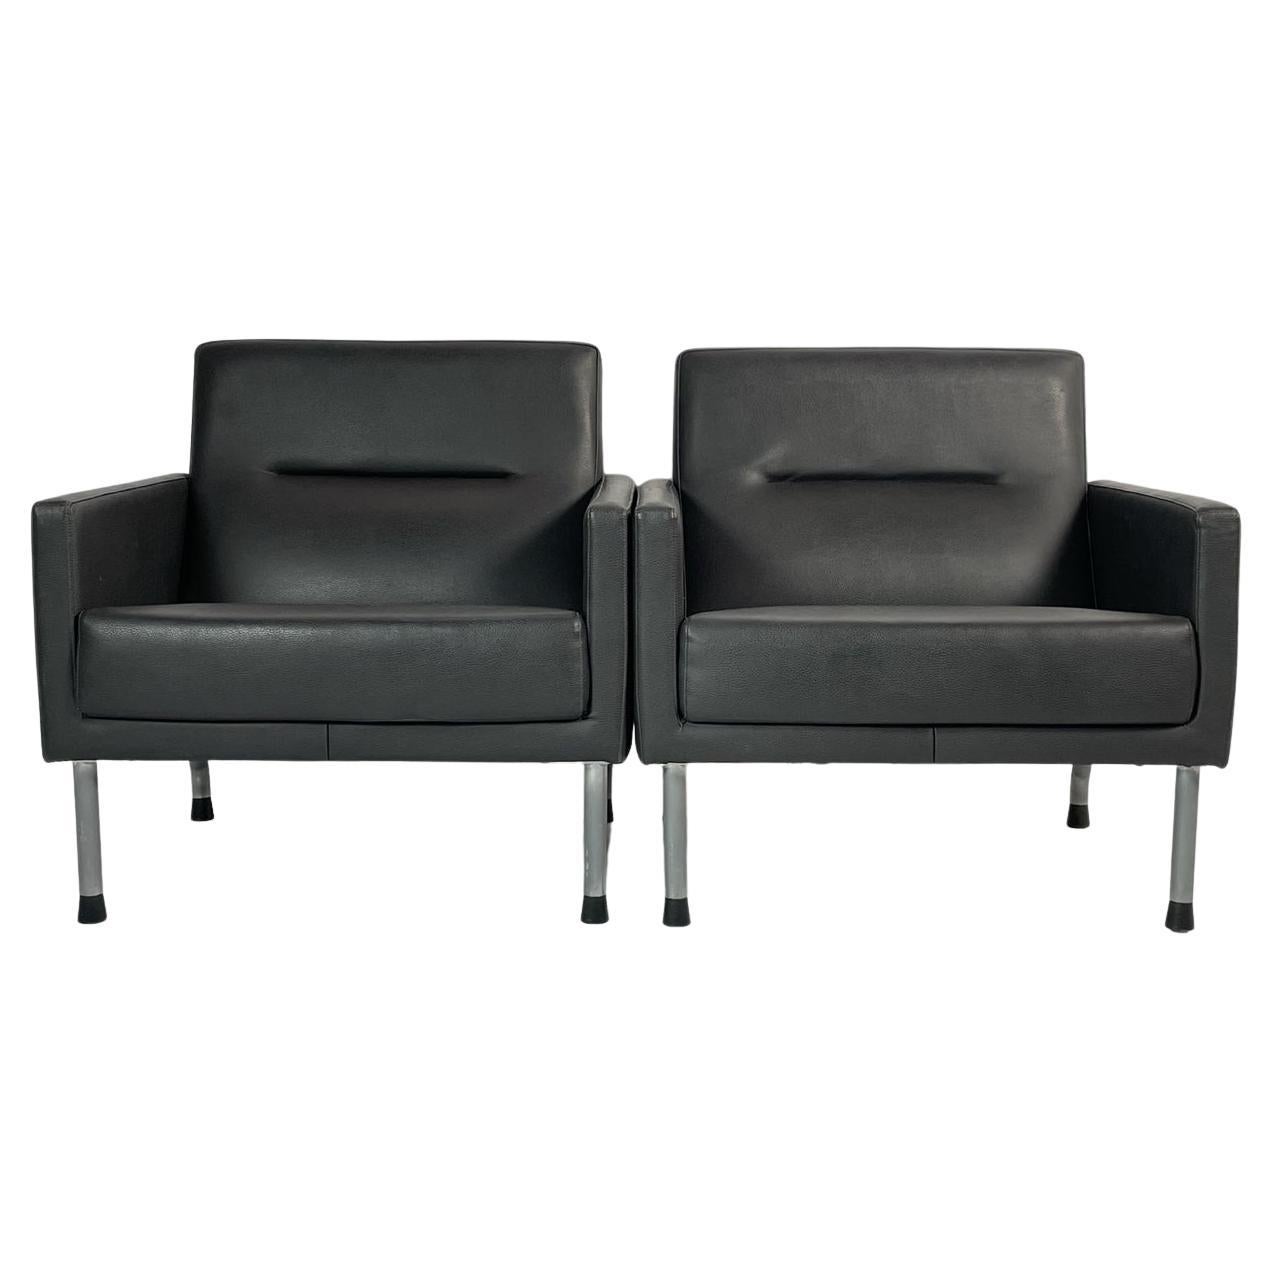 Pair of Highback-Sidewalk Lounge Chairs by Brayton International